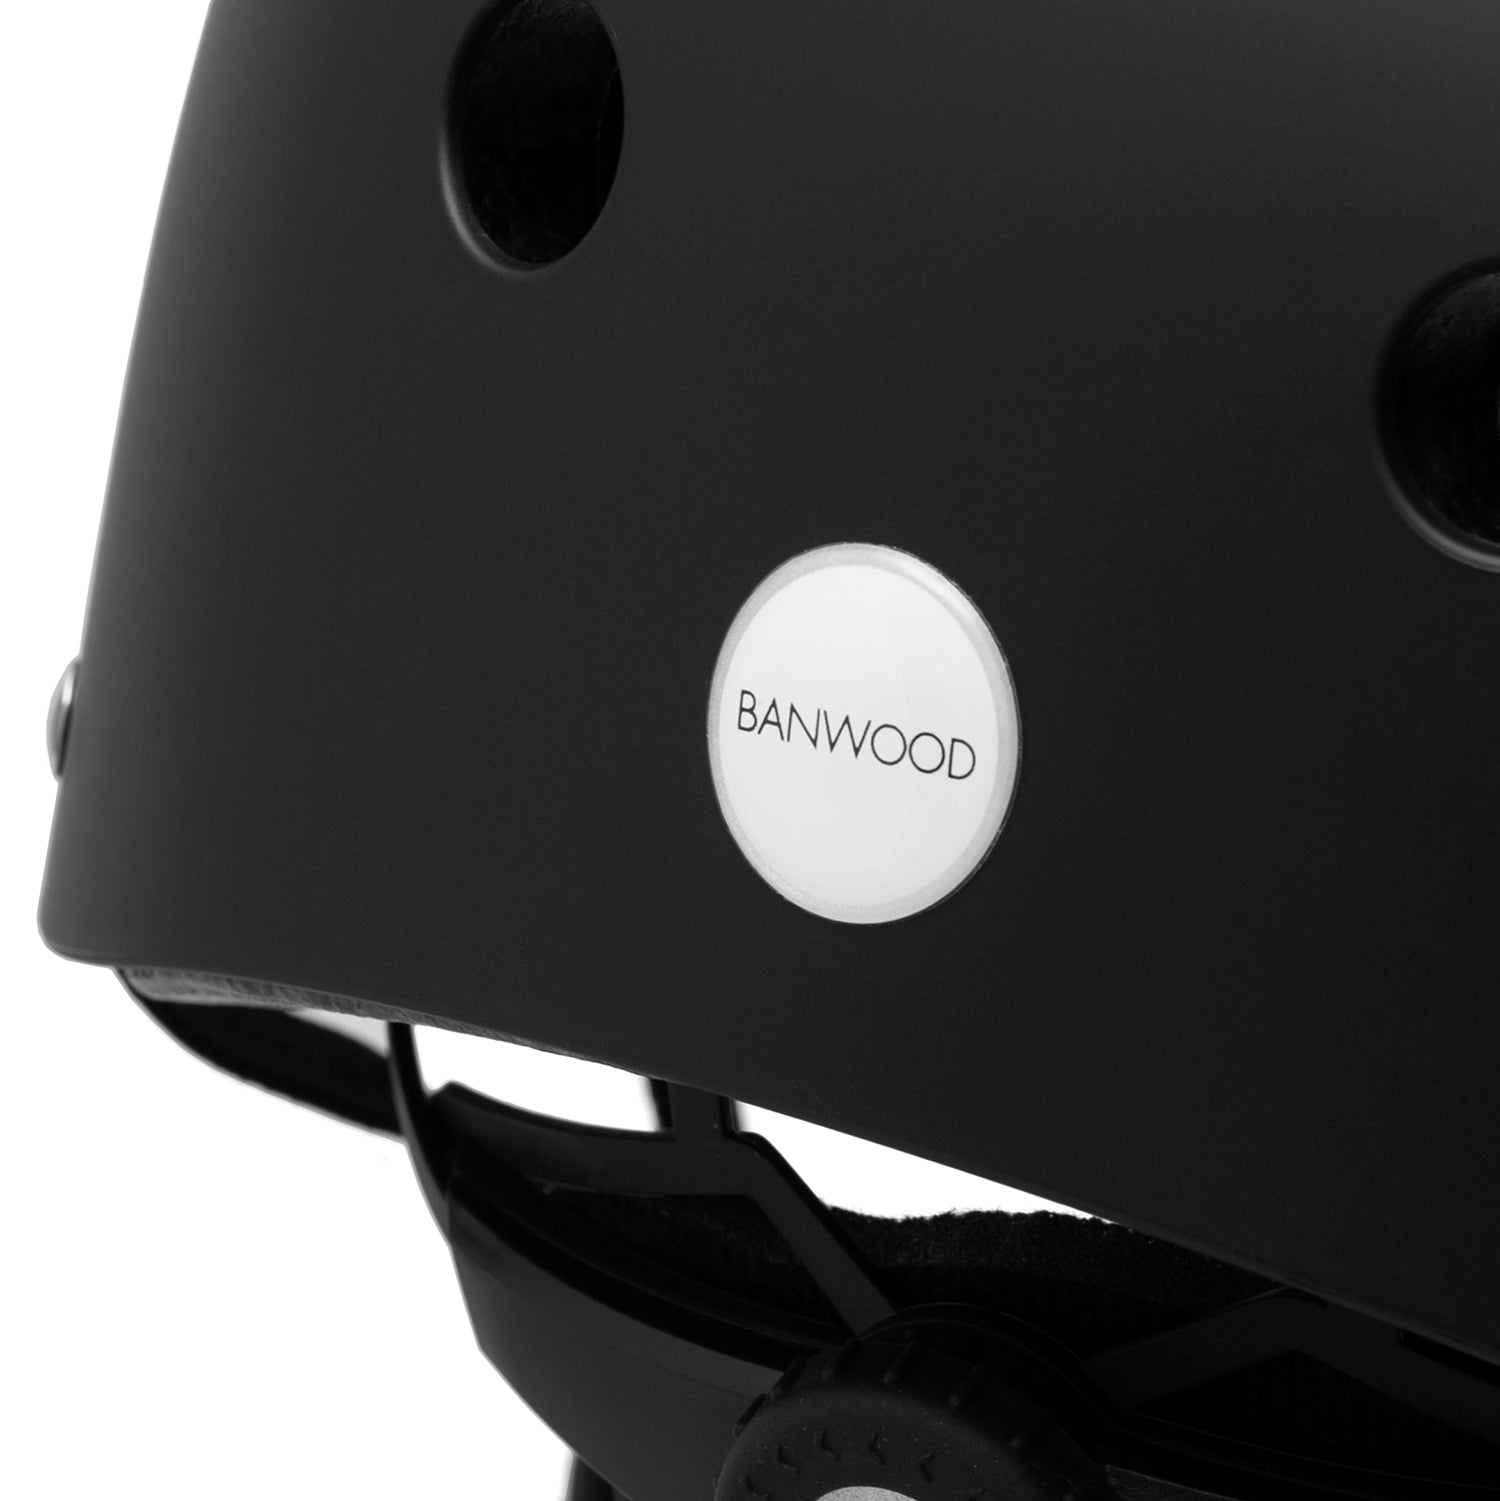 Banwood Classic Helmet, Black